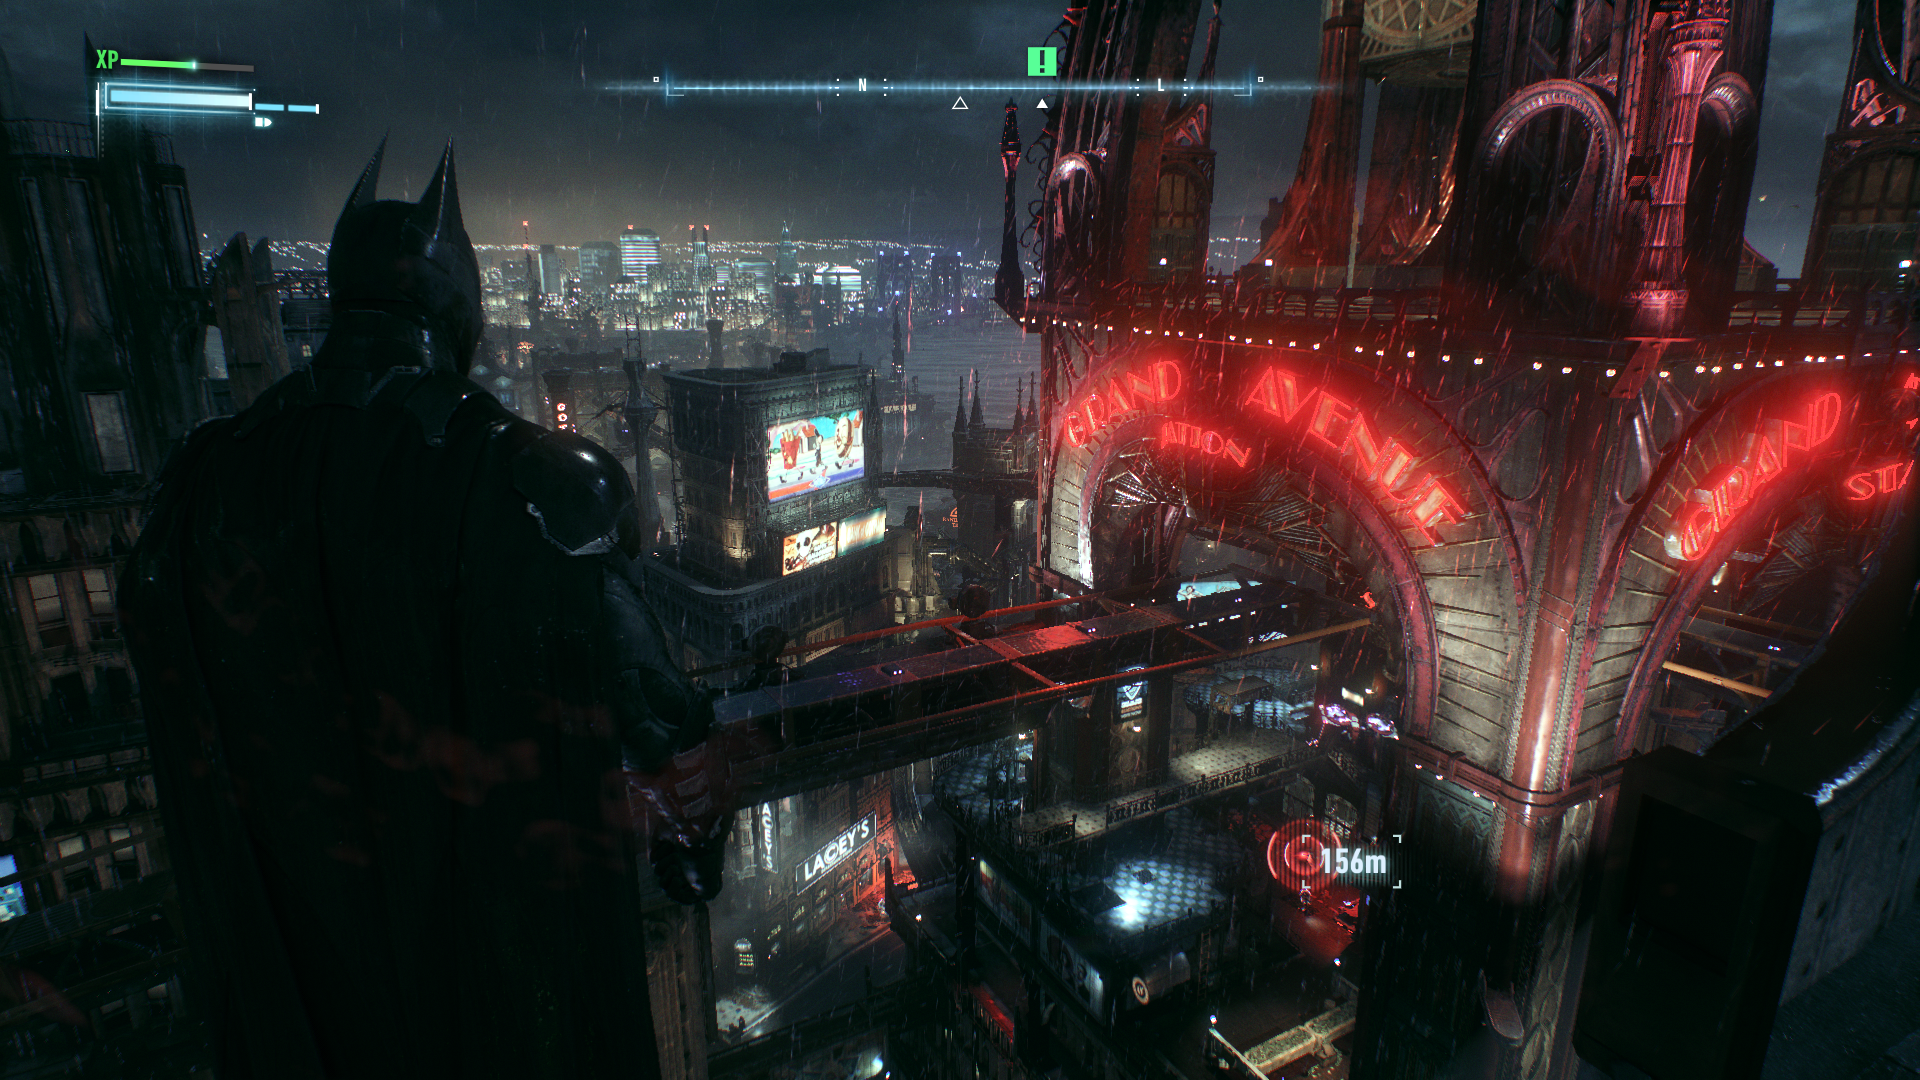 Screenshot - BATMAN - DEPTH OF FIELD PACK (Batman: Arkham Knight) .